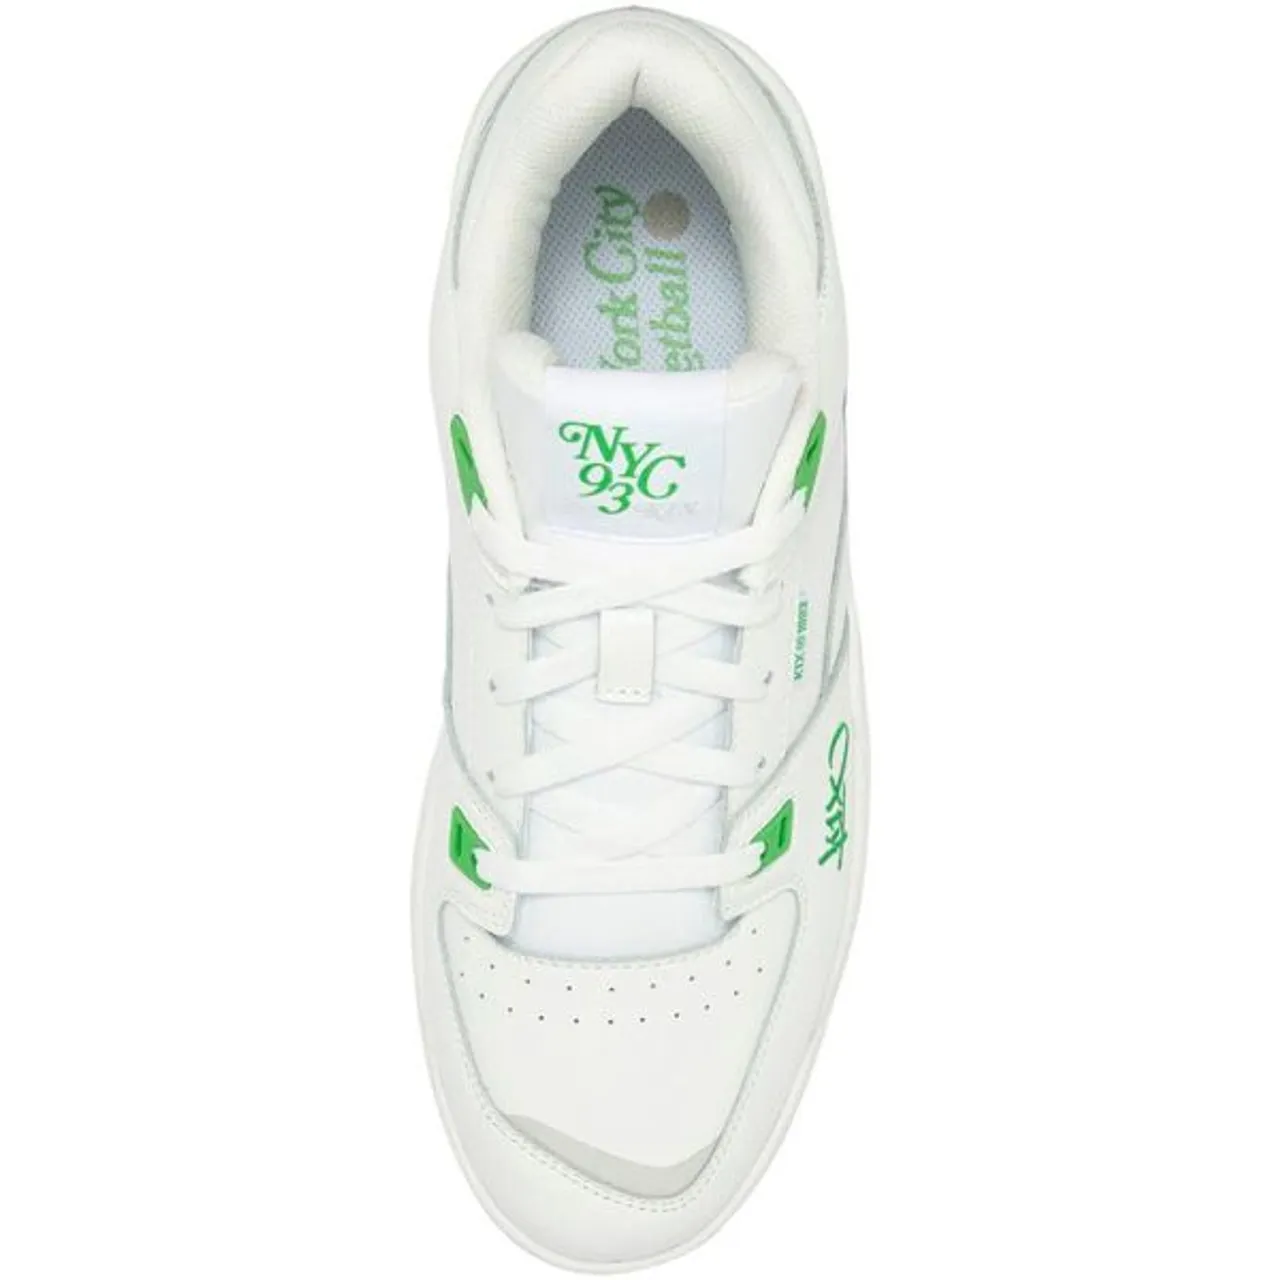 Sneaker K1X "Glide white/green M" Gr. 46, grün (white, green) Schuhe Schnürhalbschuhe